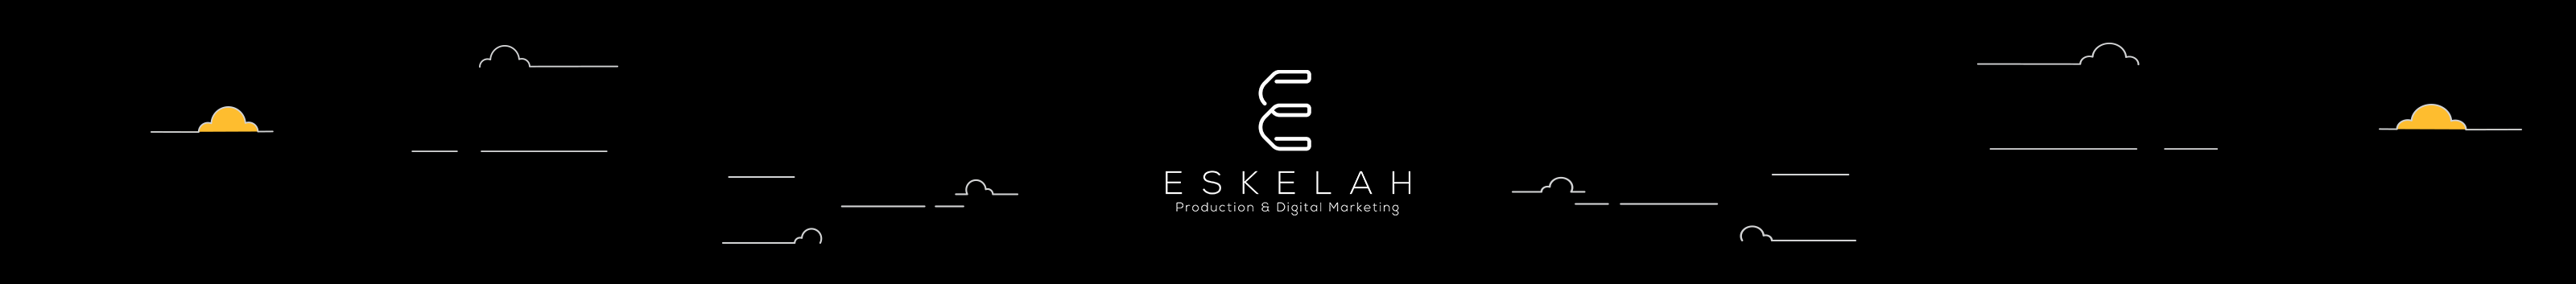 Eskelah Production & Digital Marketing's profile banner